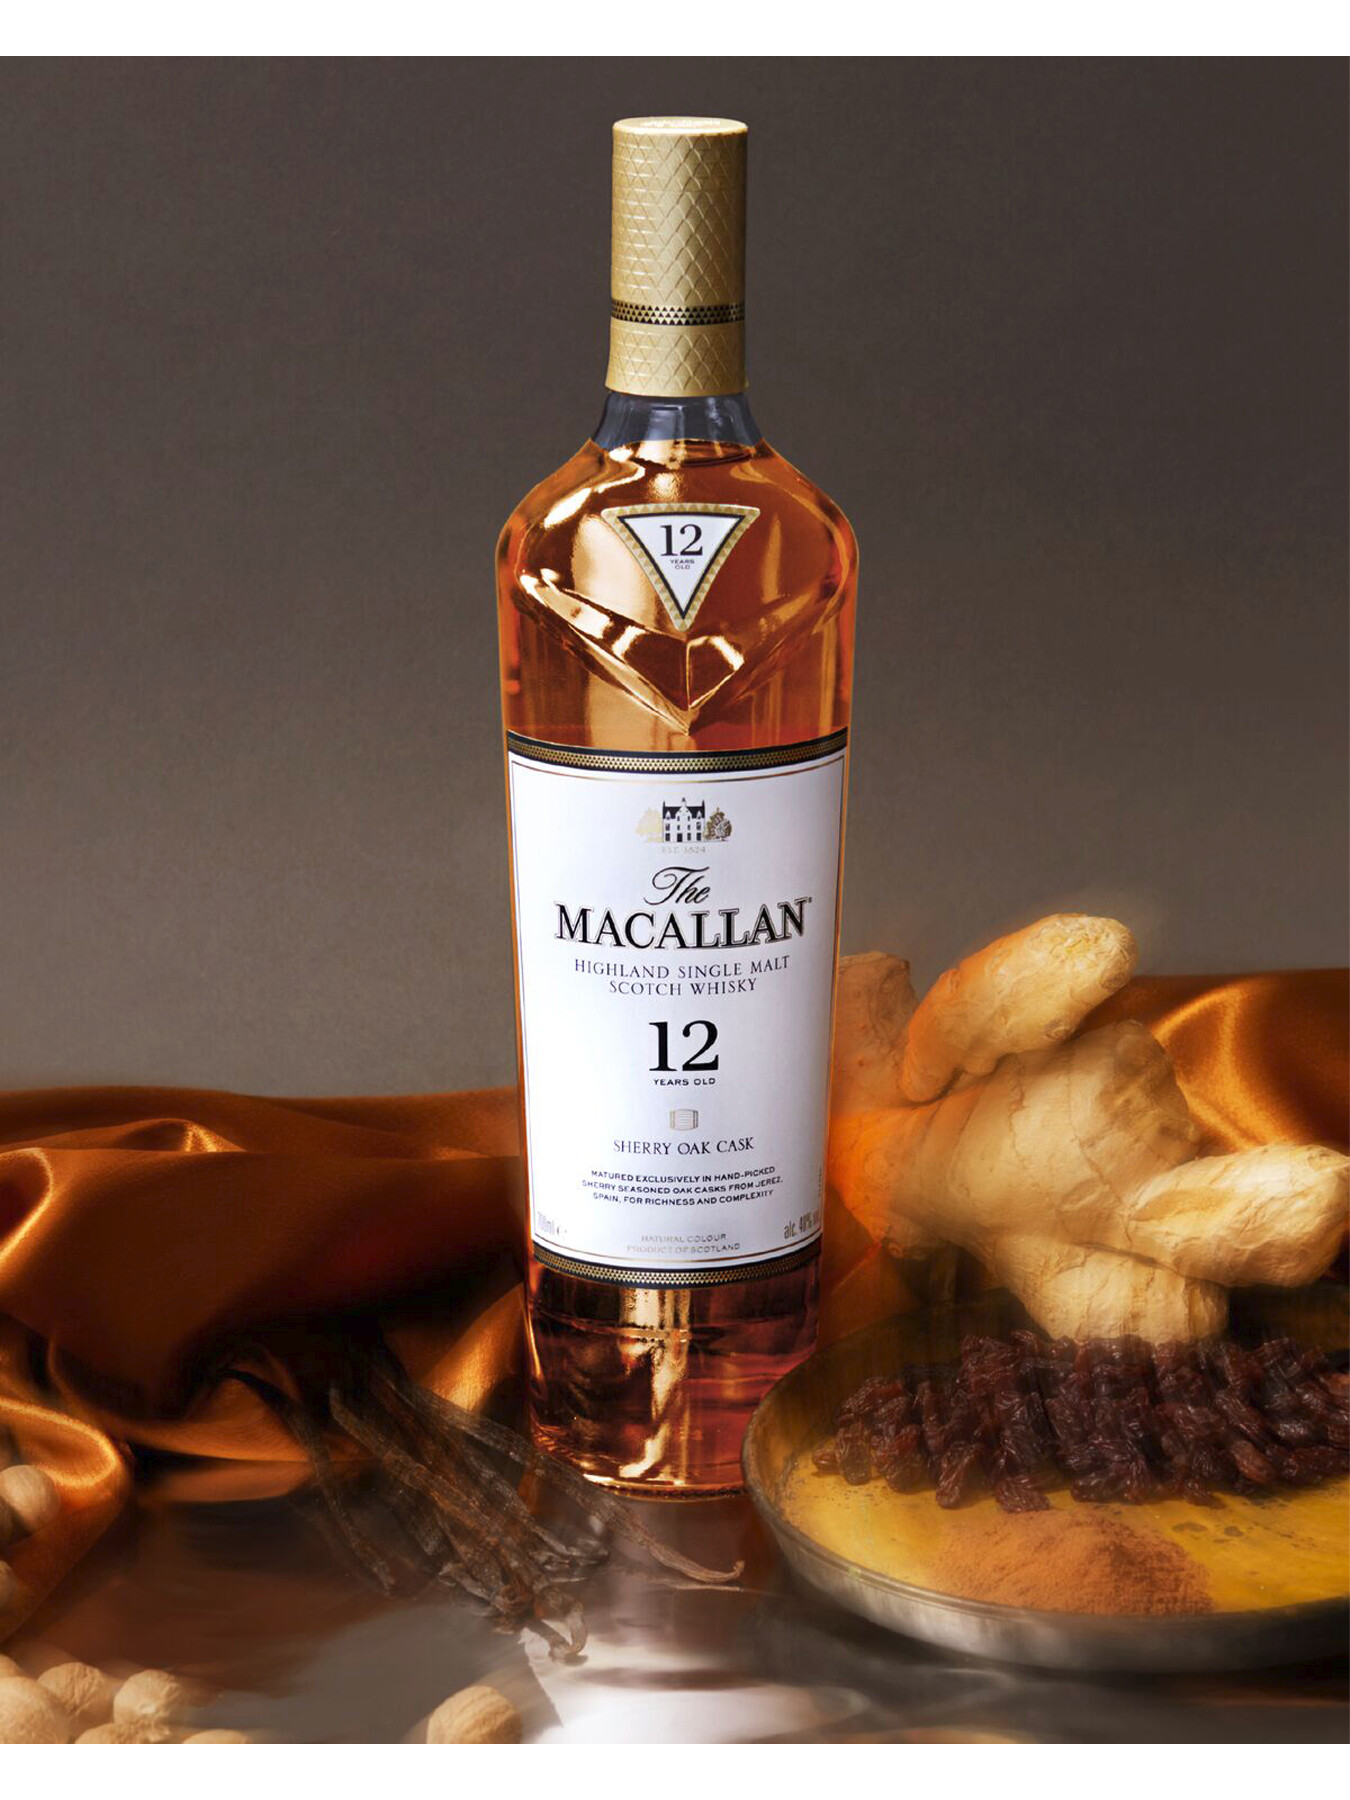 The Macallan Highland Single Malt Scotch Sherry Oak Cask 12 Year Old